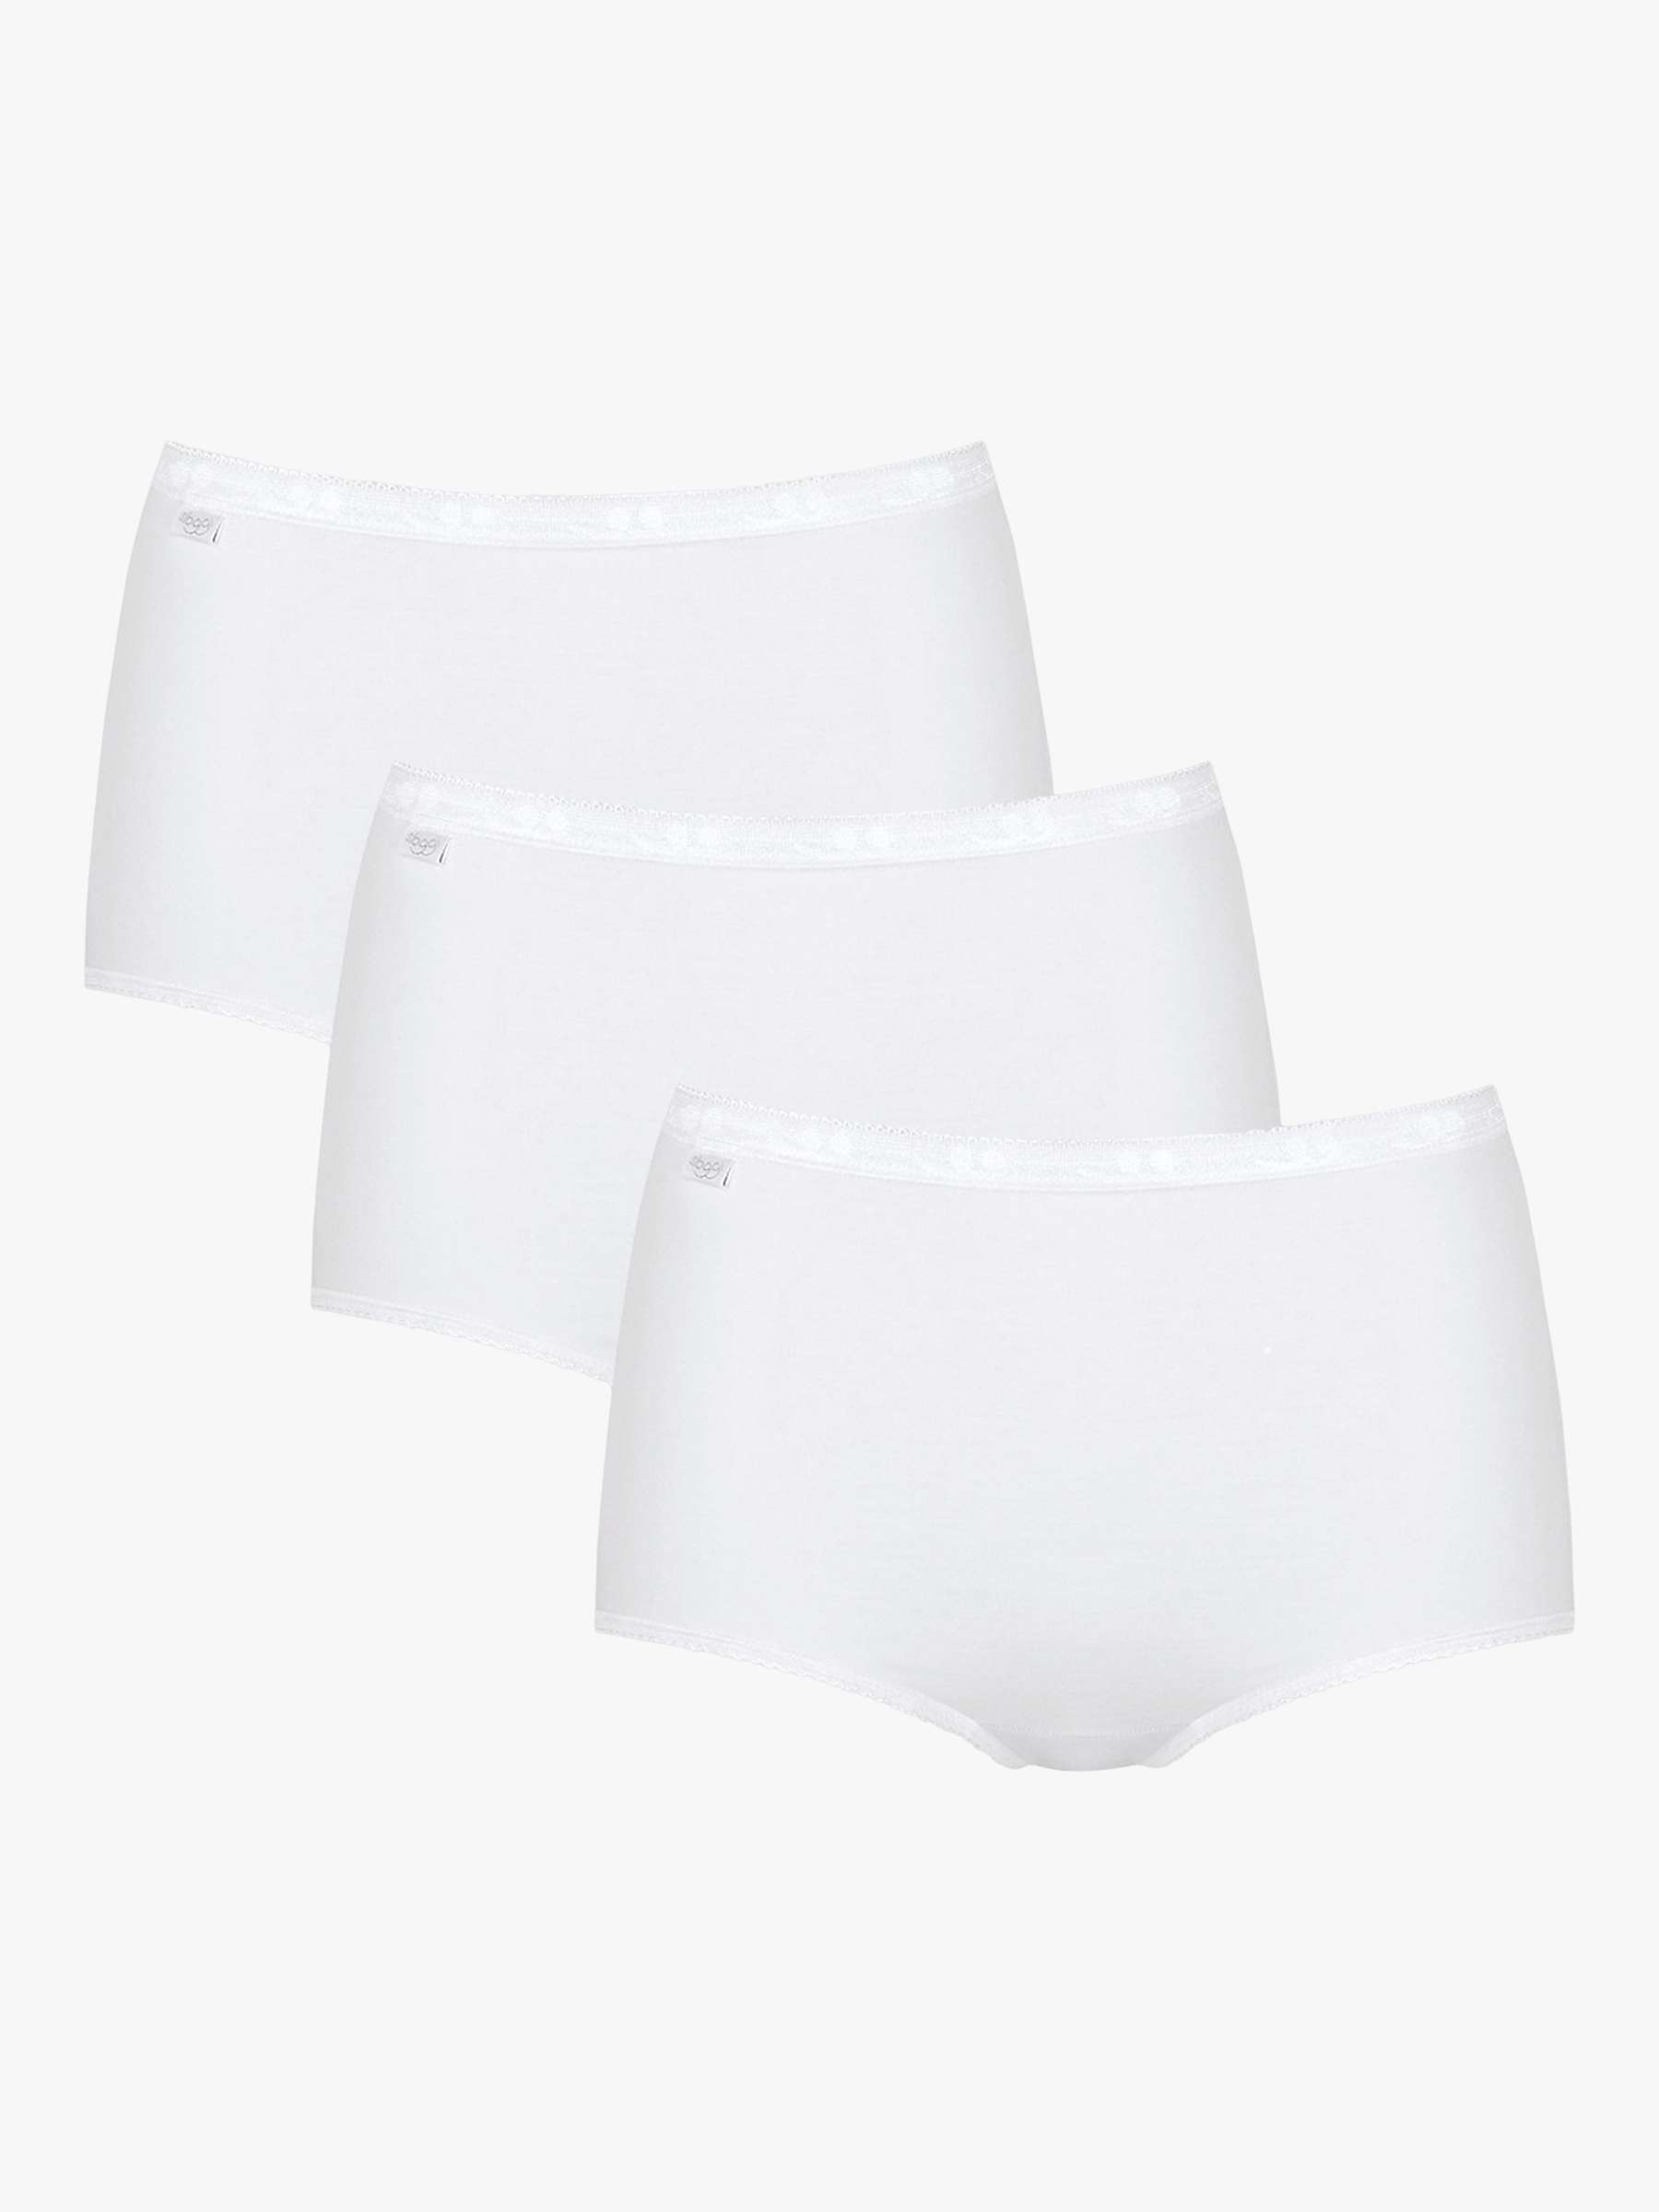 Buy sloggi Basic+ Maxi Cotton Briefs, Pack of 3 Online at johnlewis.com